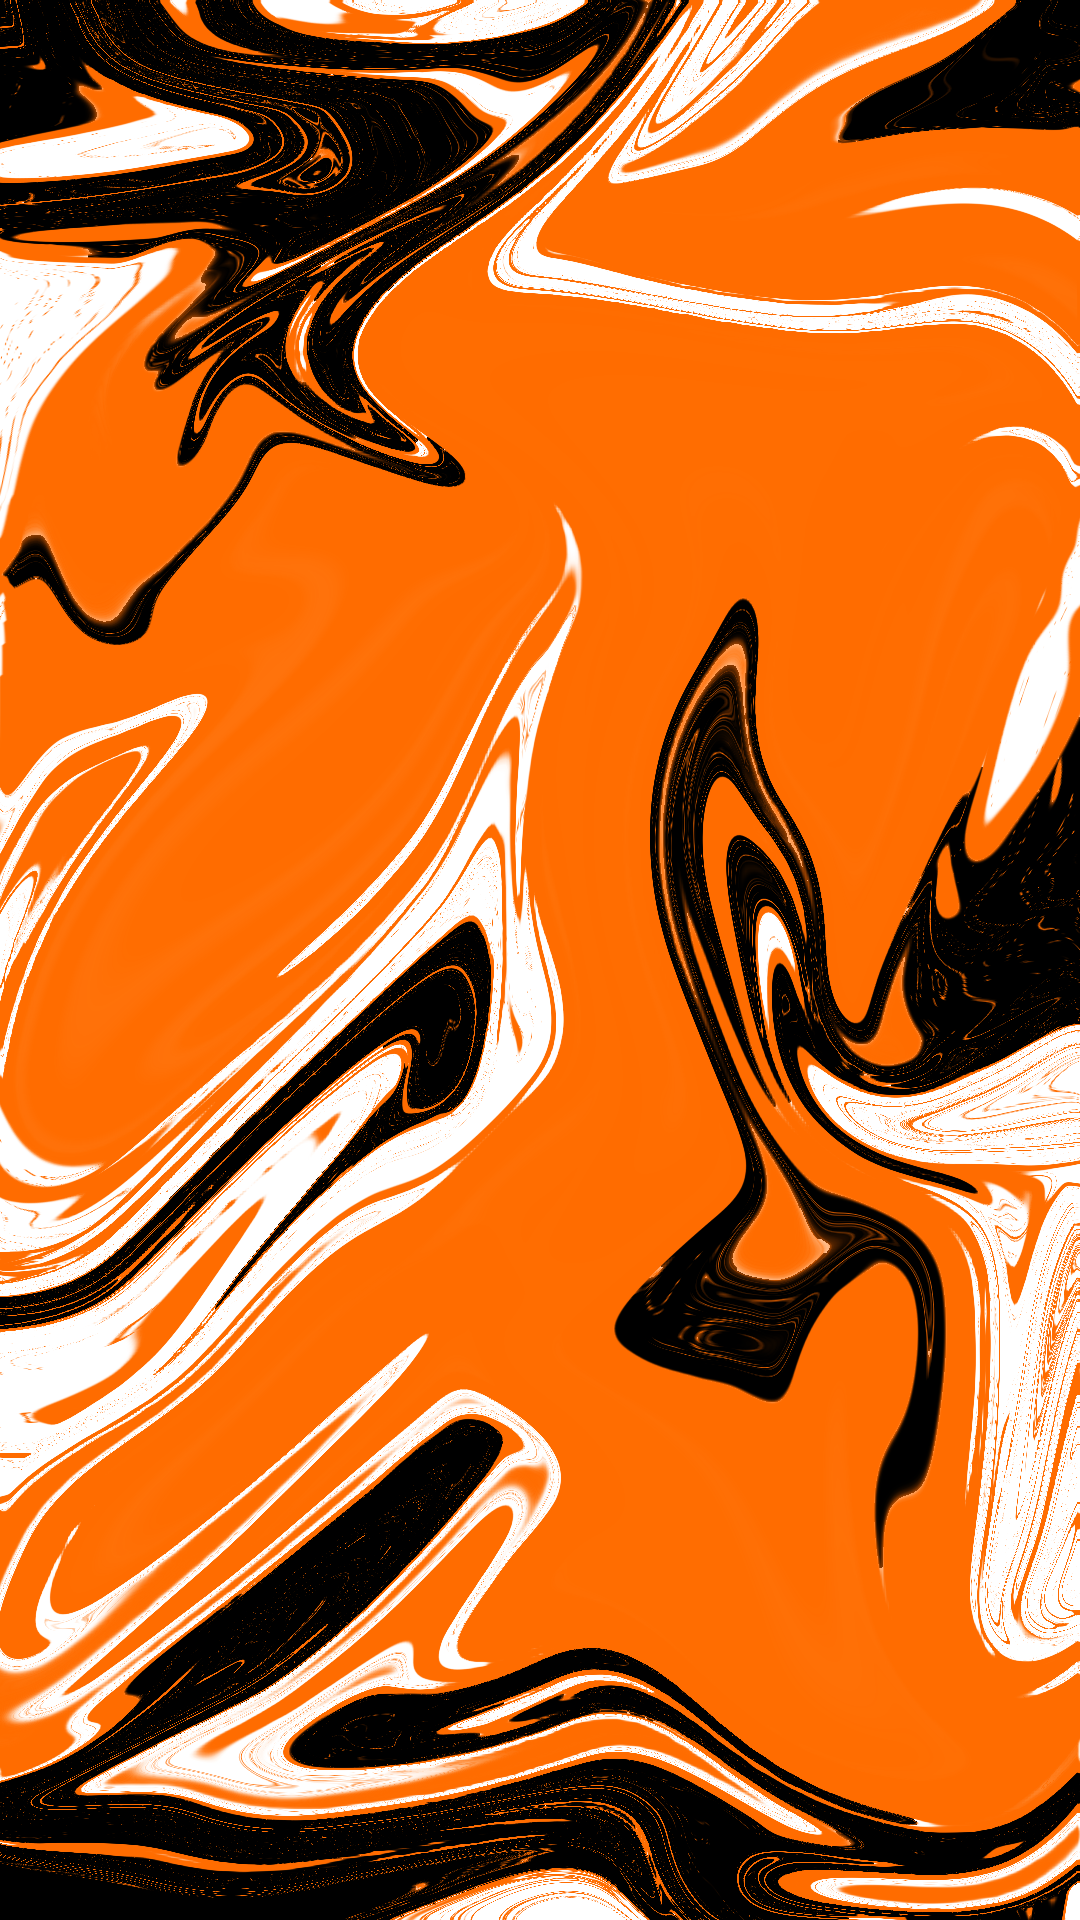 Wallpaper Orange Visual Arts Fiction Hood Cartoon Background   Download Free Image